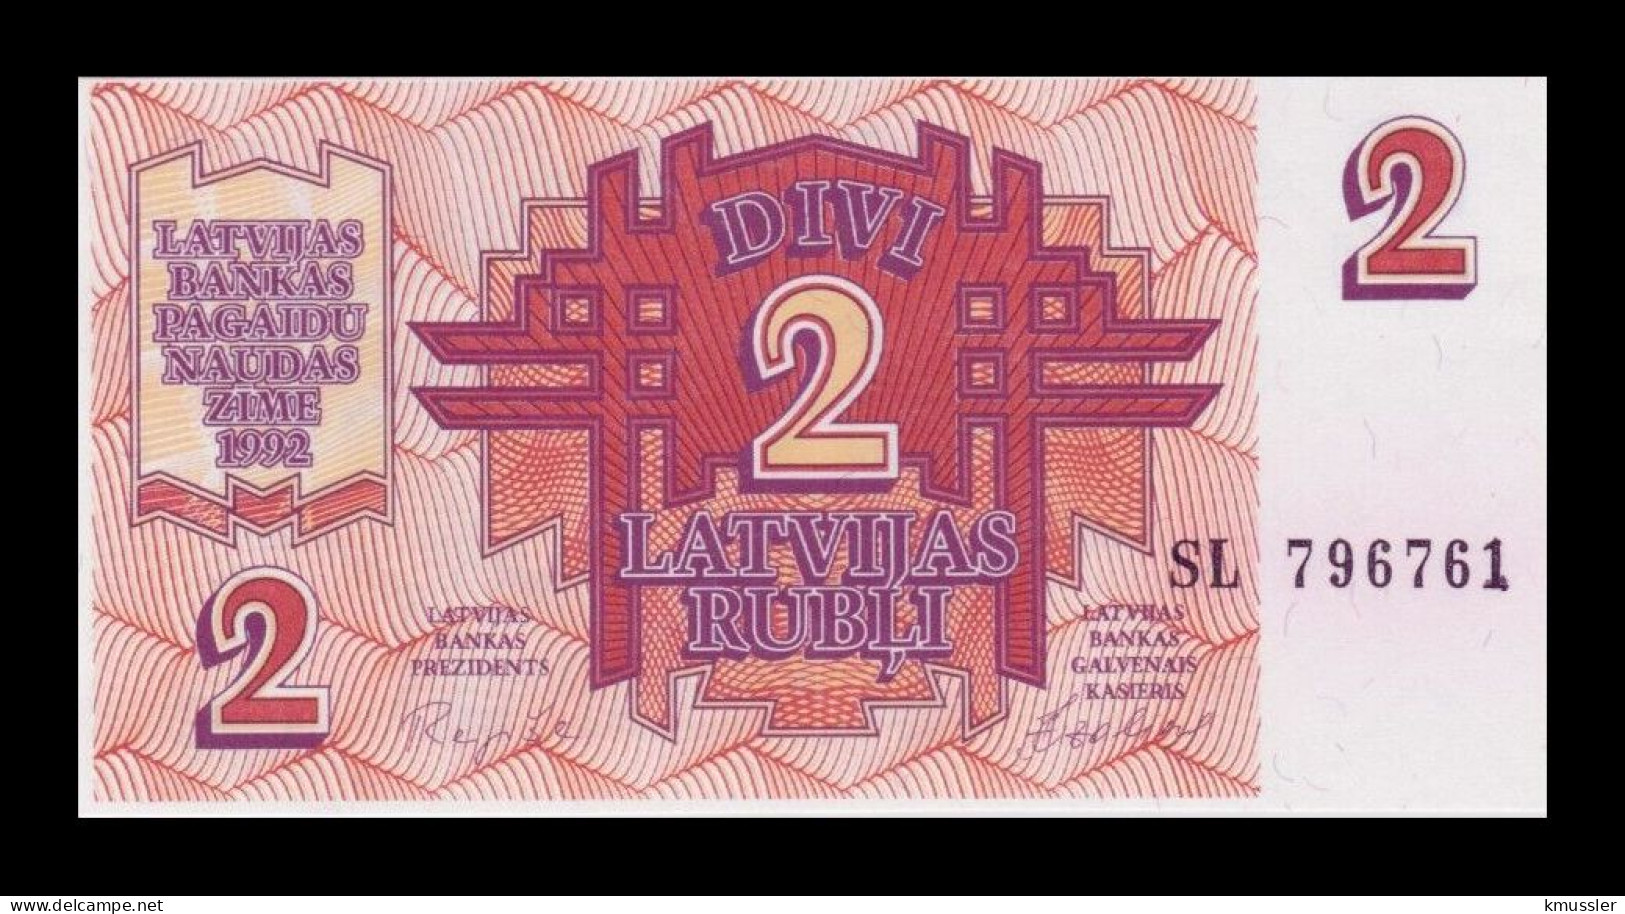 # # # Banknote Lettland (Latvijas) 2 Rubel (Rublis) 1992 UNC # # # - Lettland